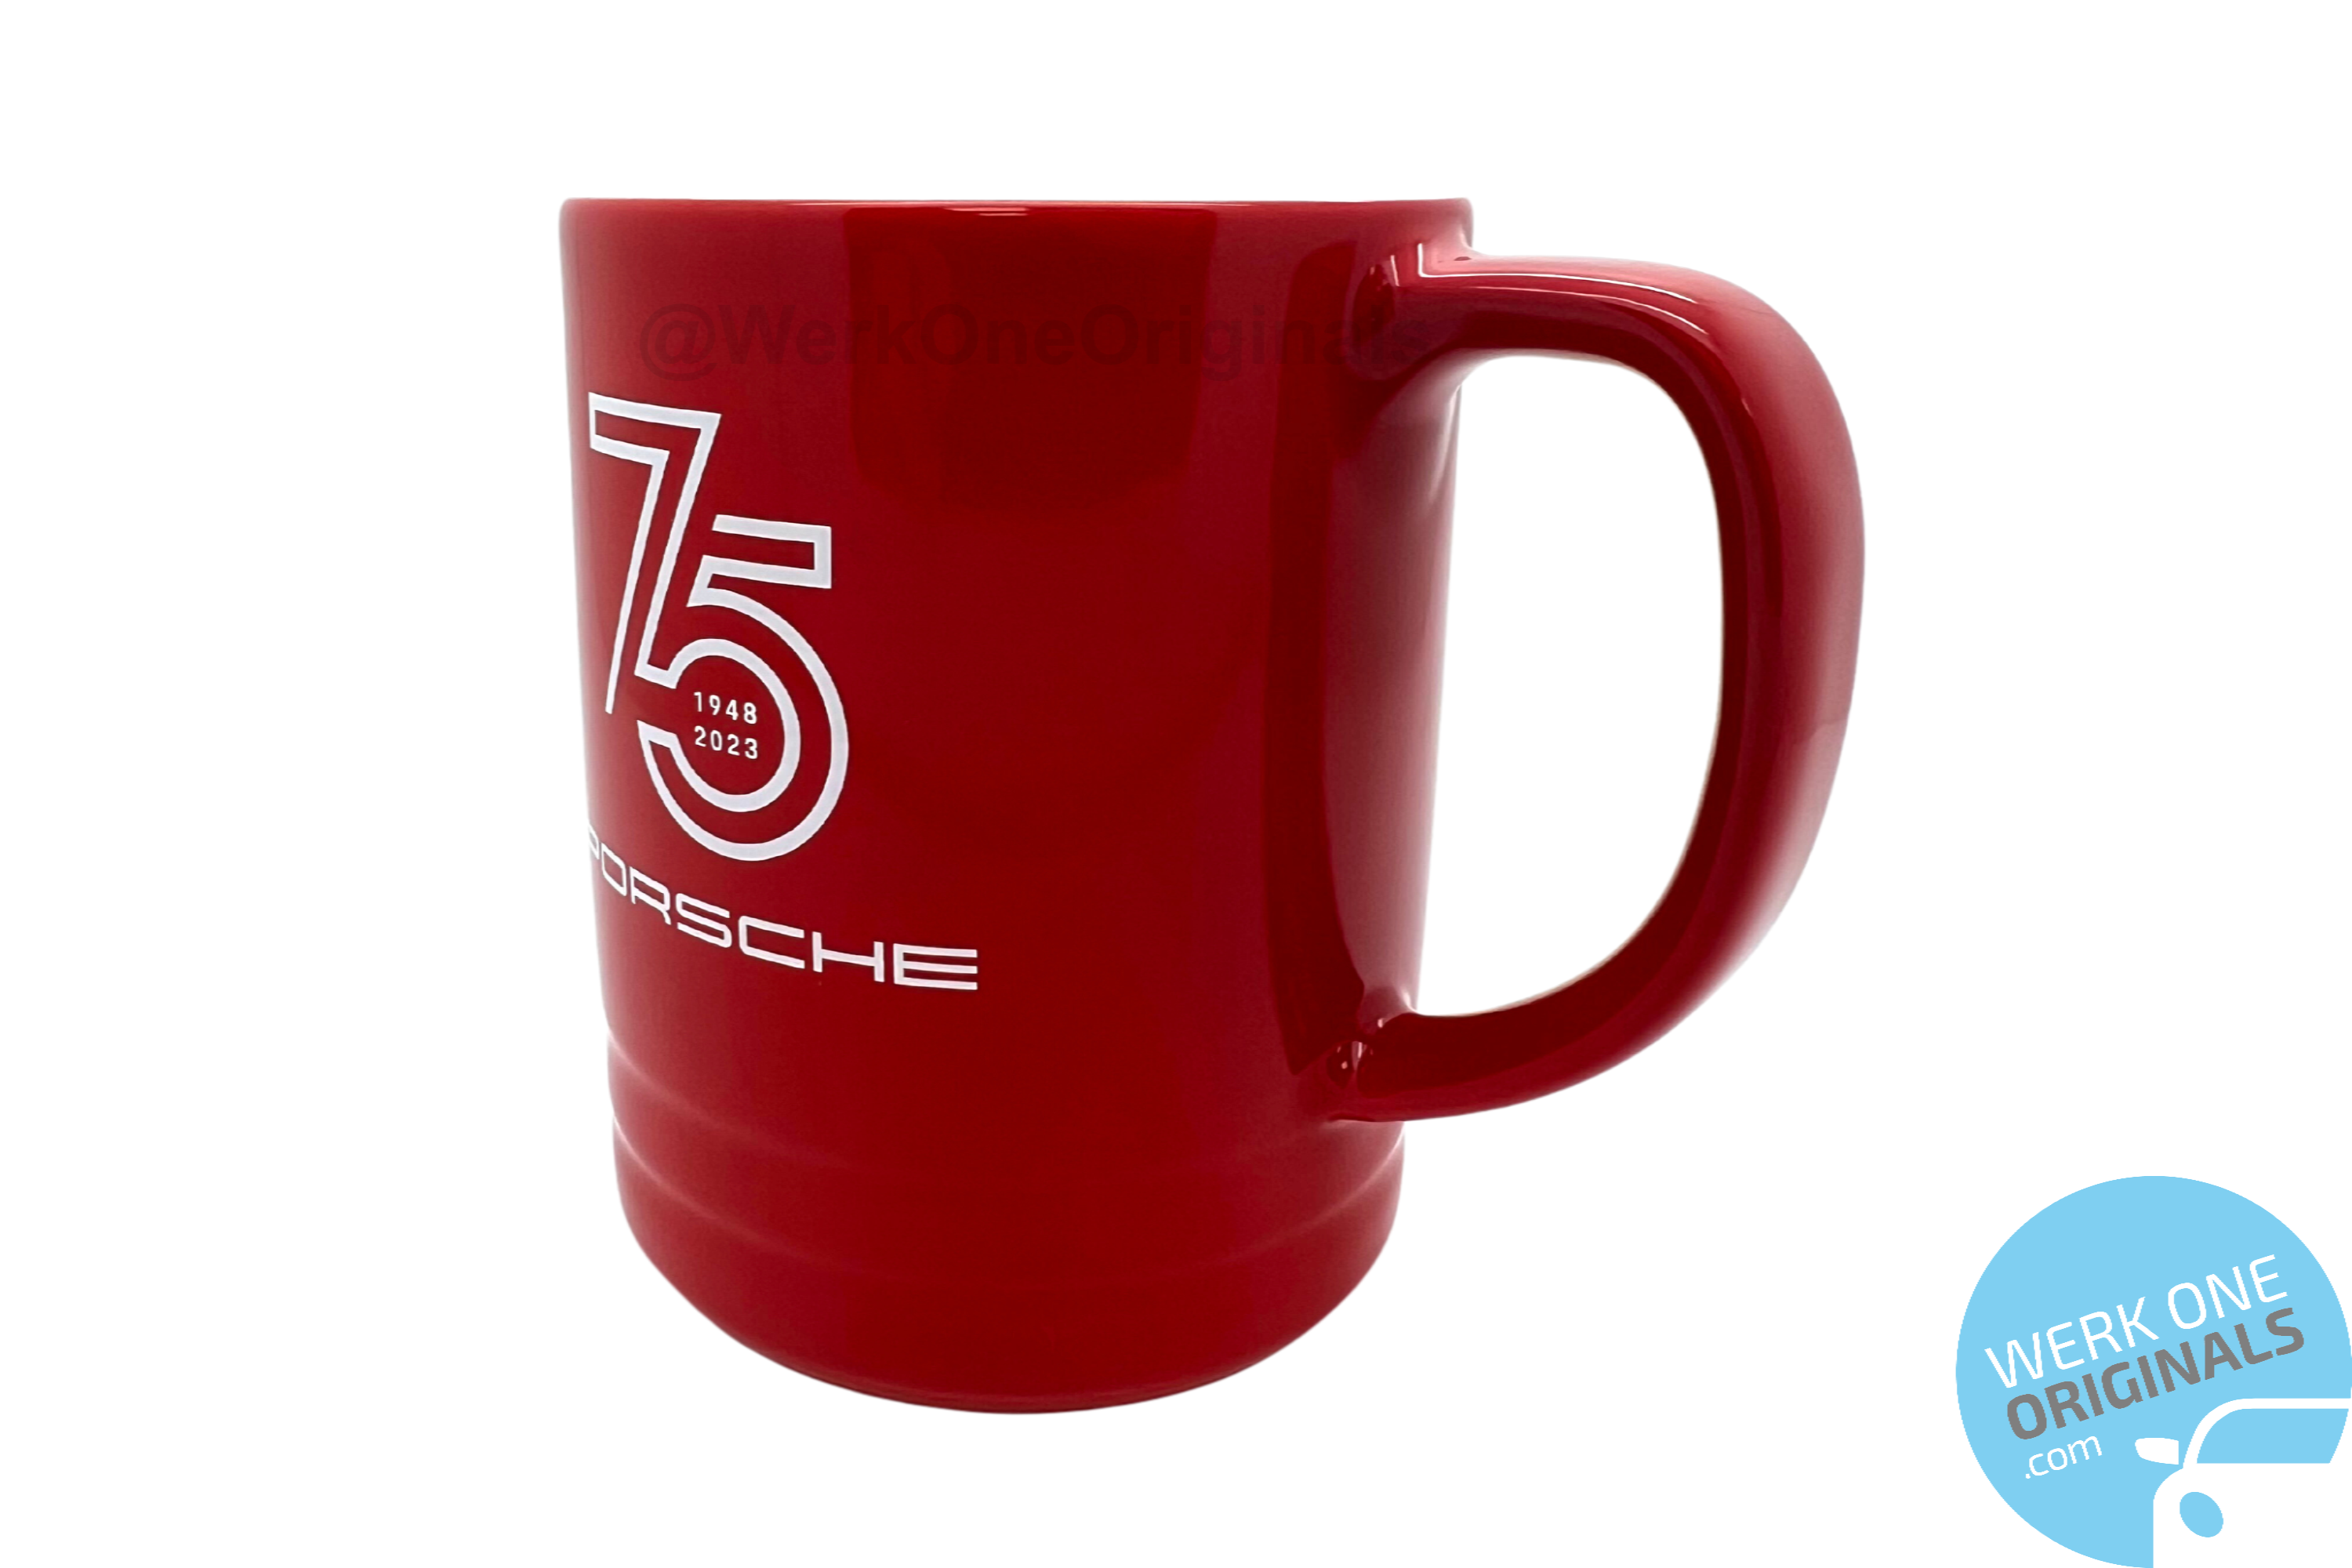 Official Porsche 75 Year Anniversary Limited Edition Mug - 420ml